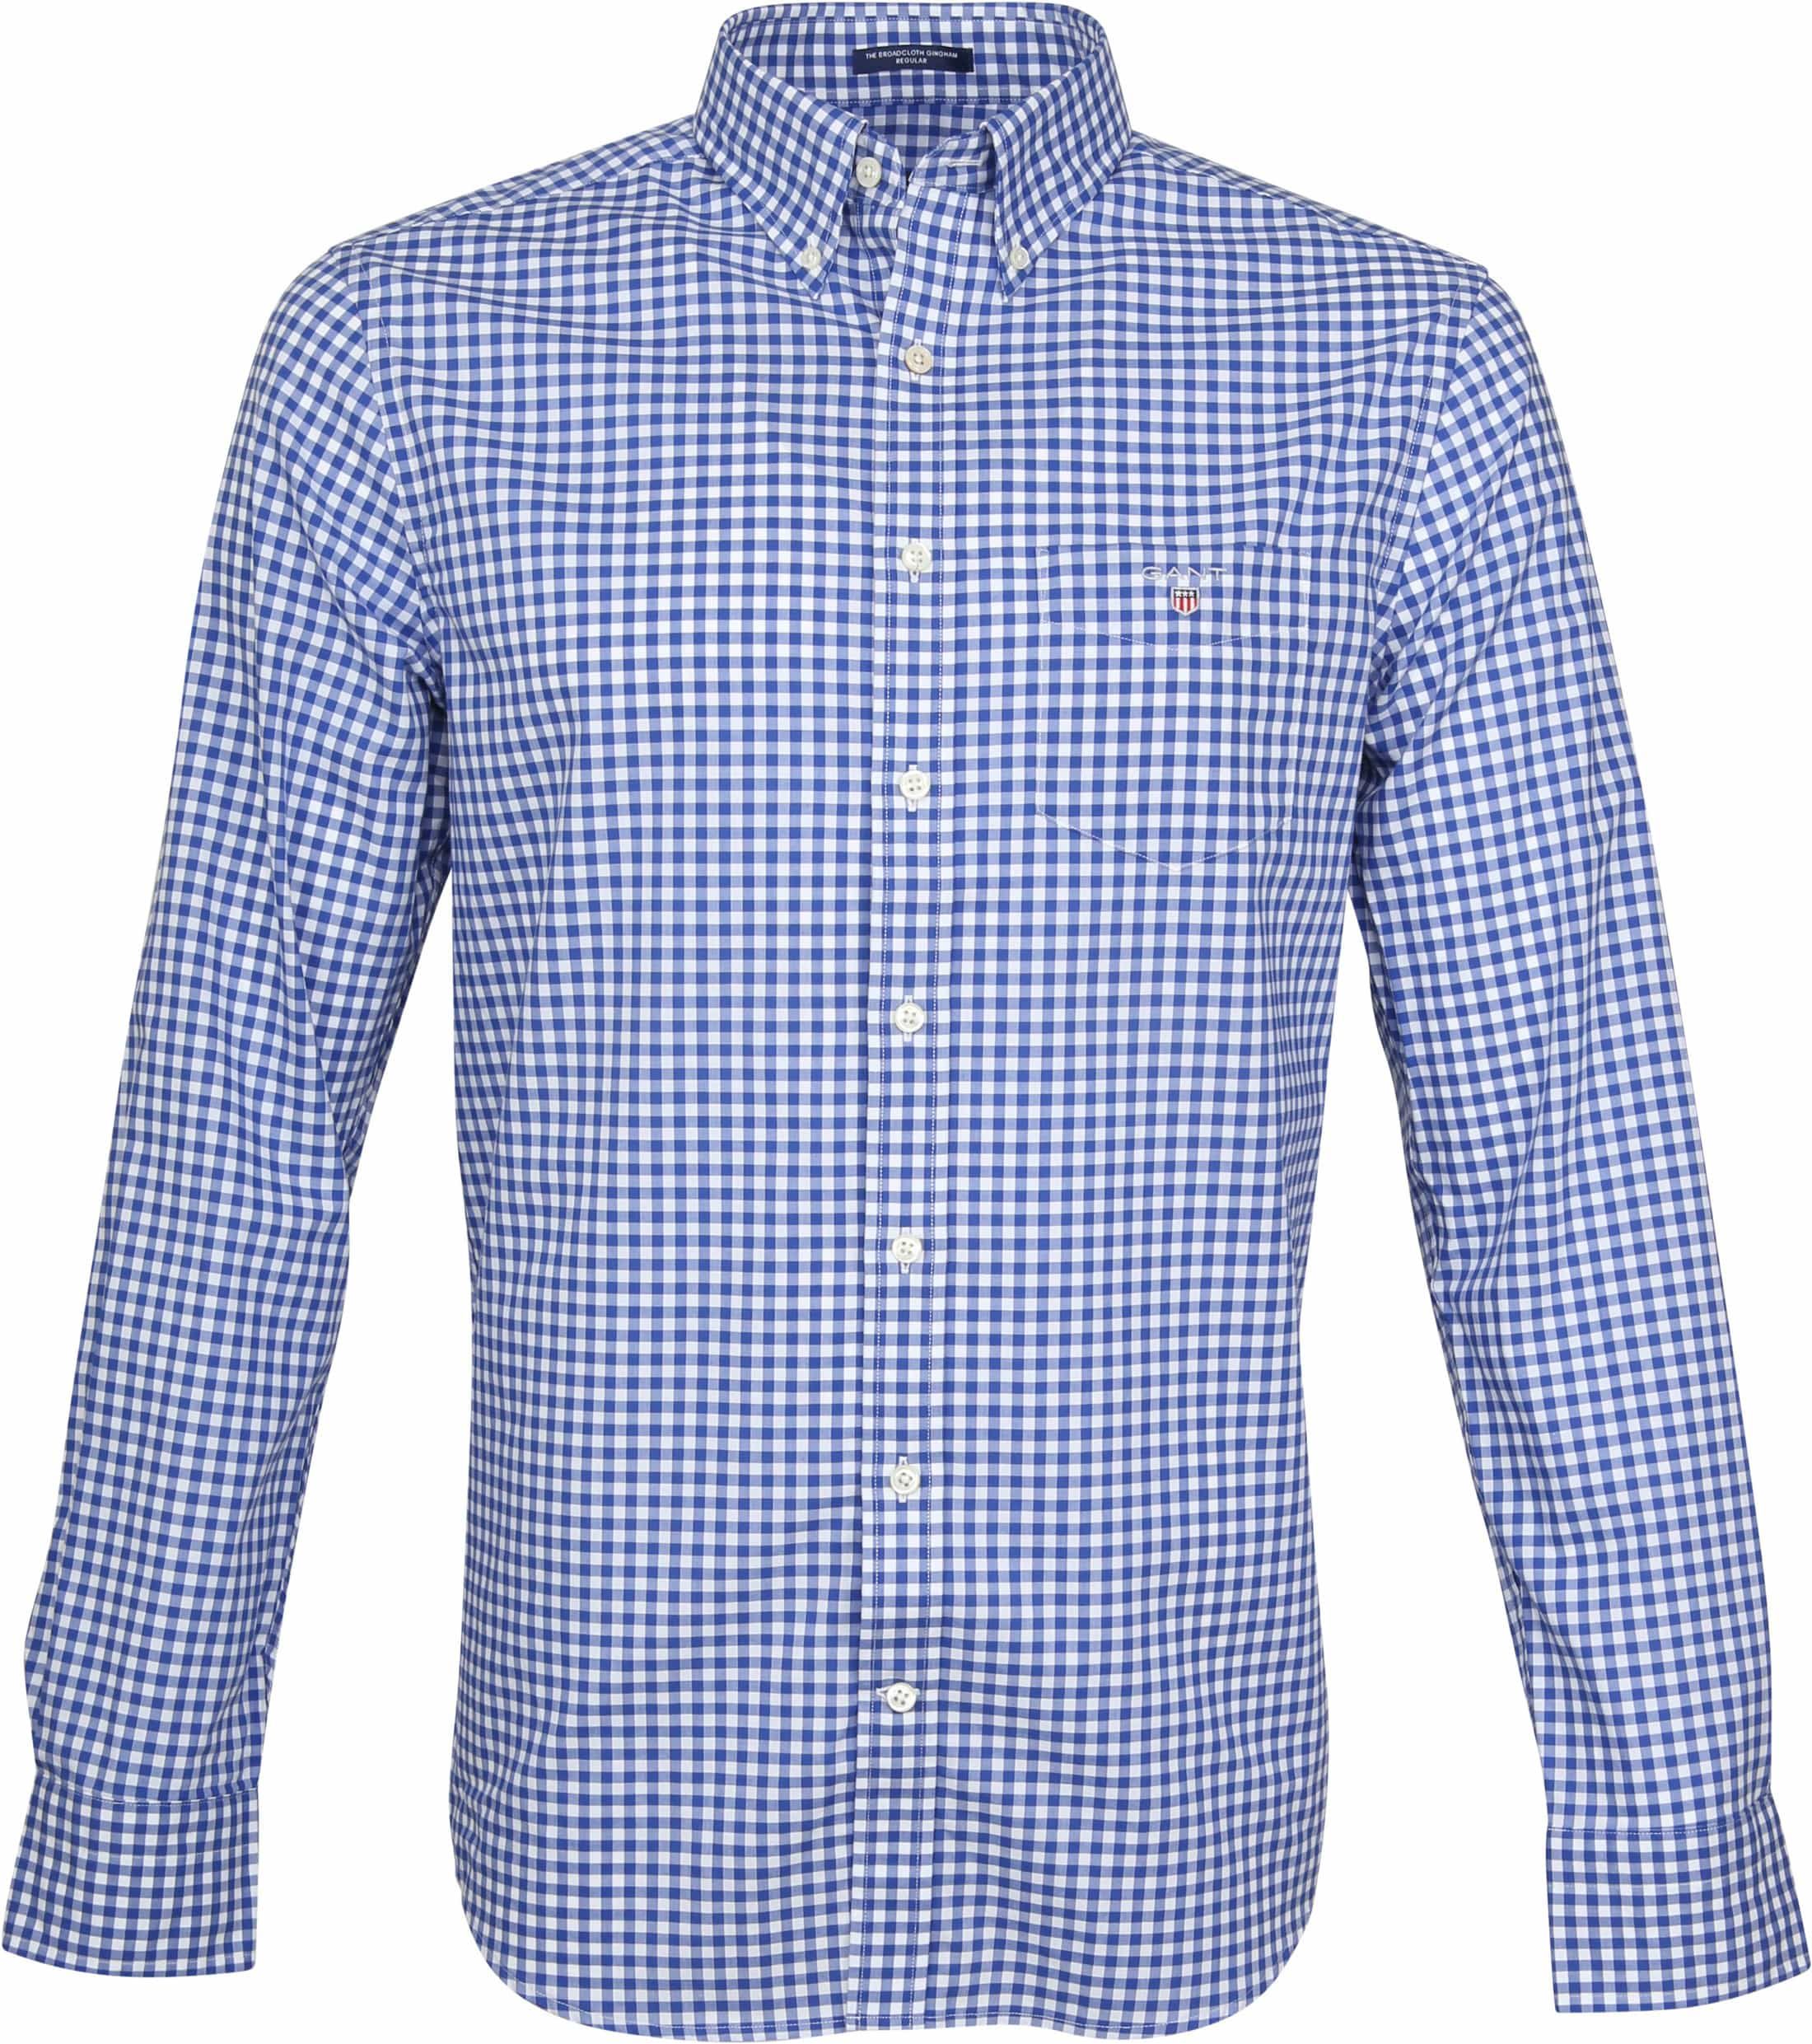 Gant Gingham Shirt Check Blue size 3XL